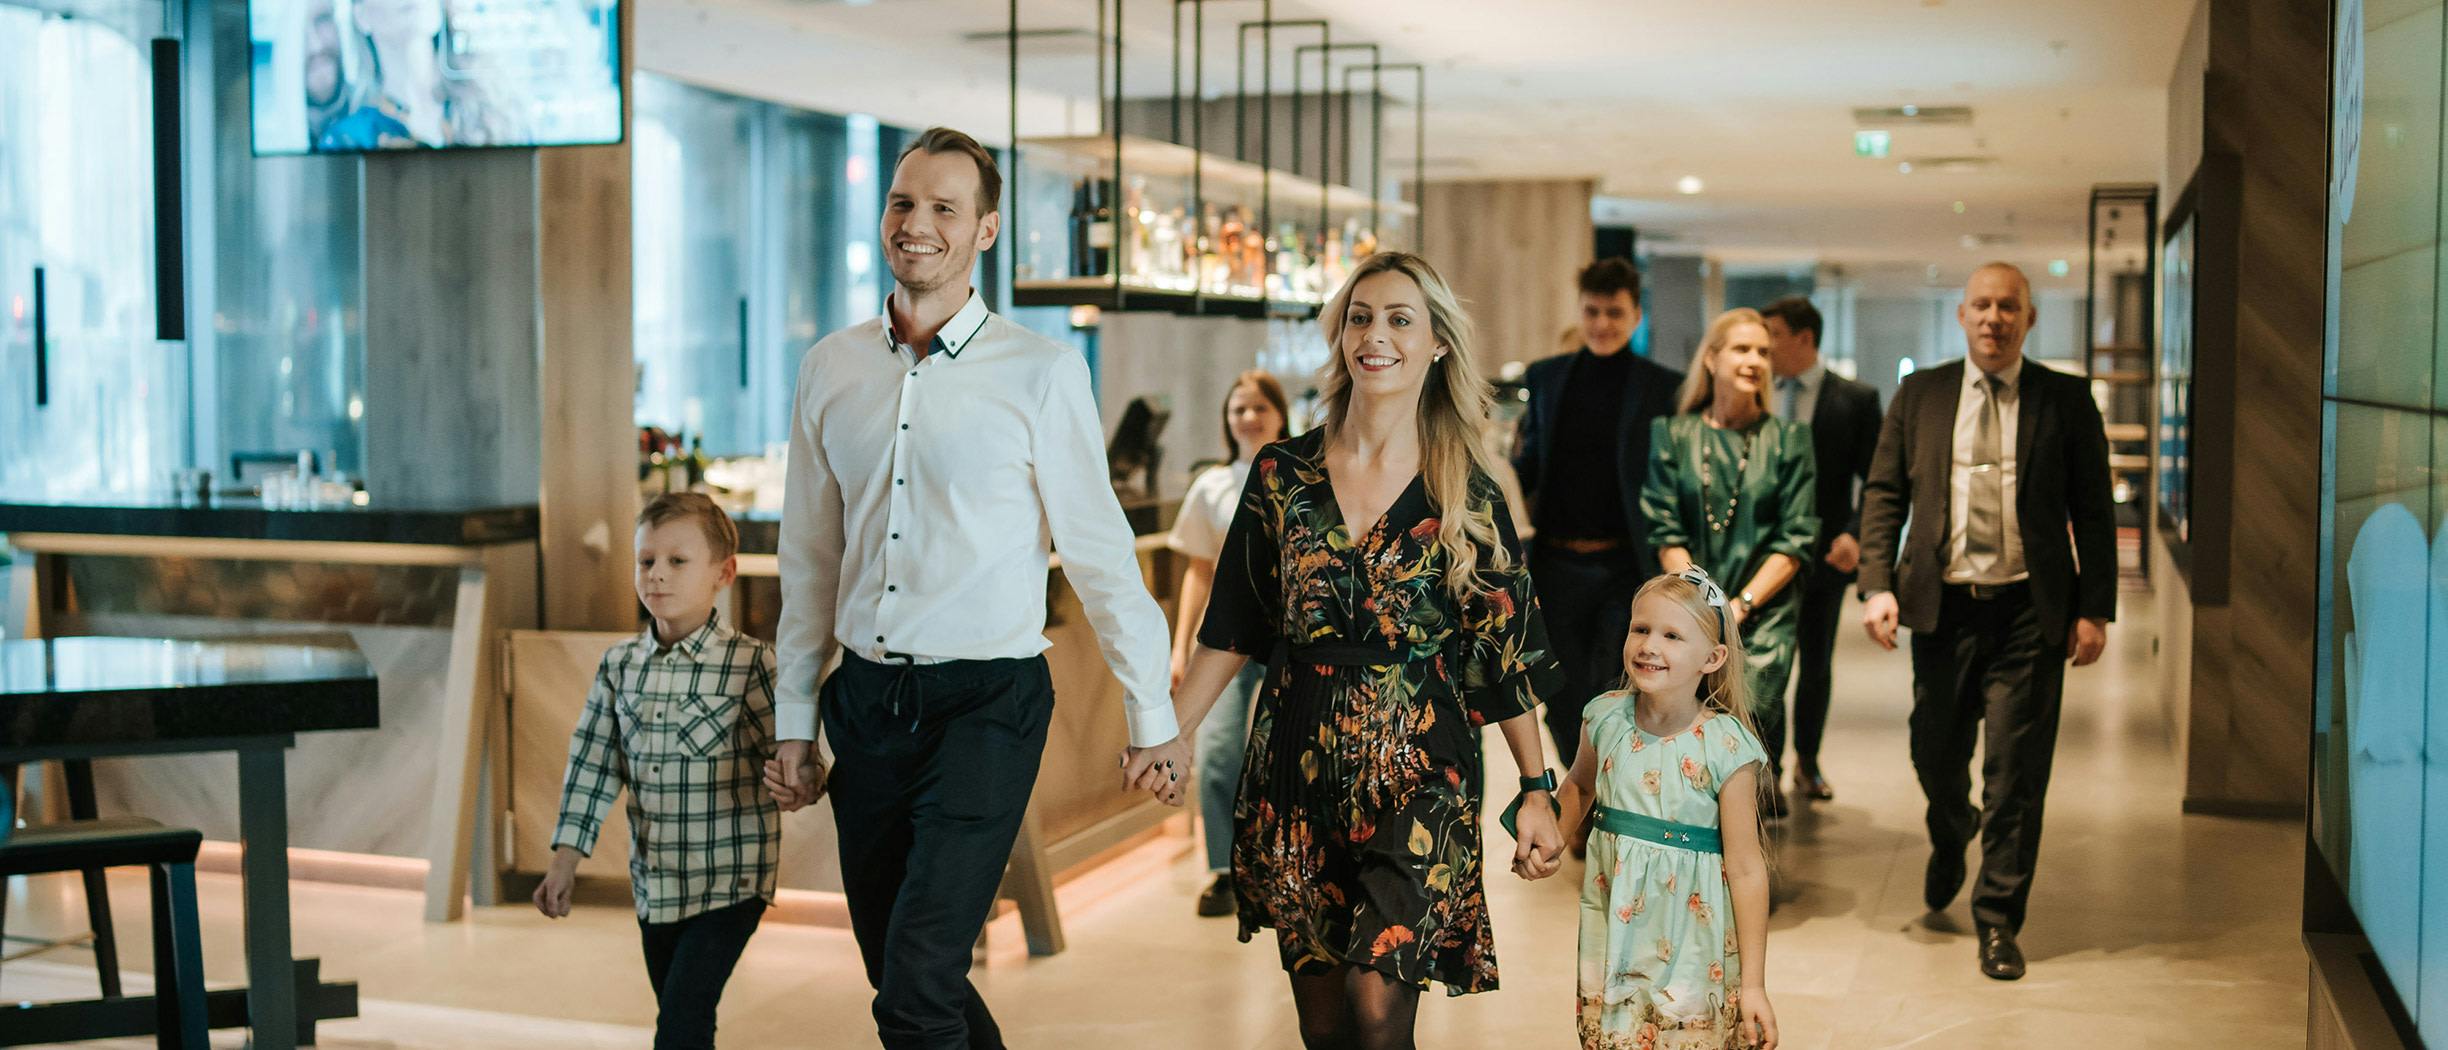 Family walking in the hotel lobby